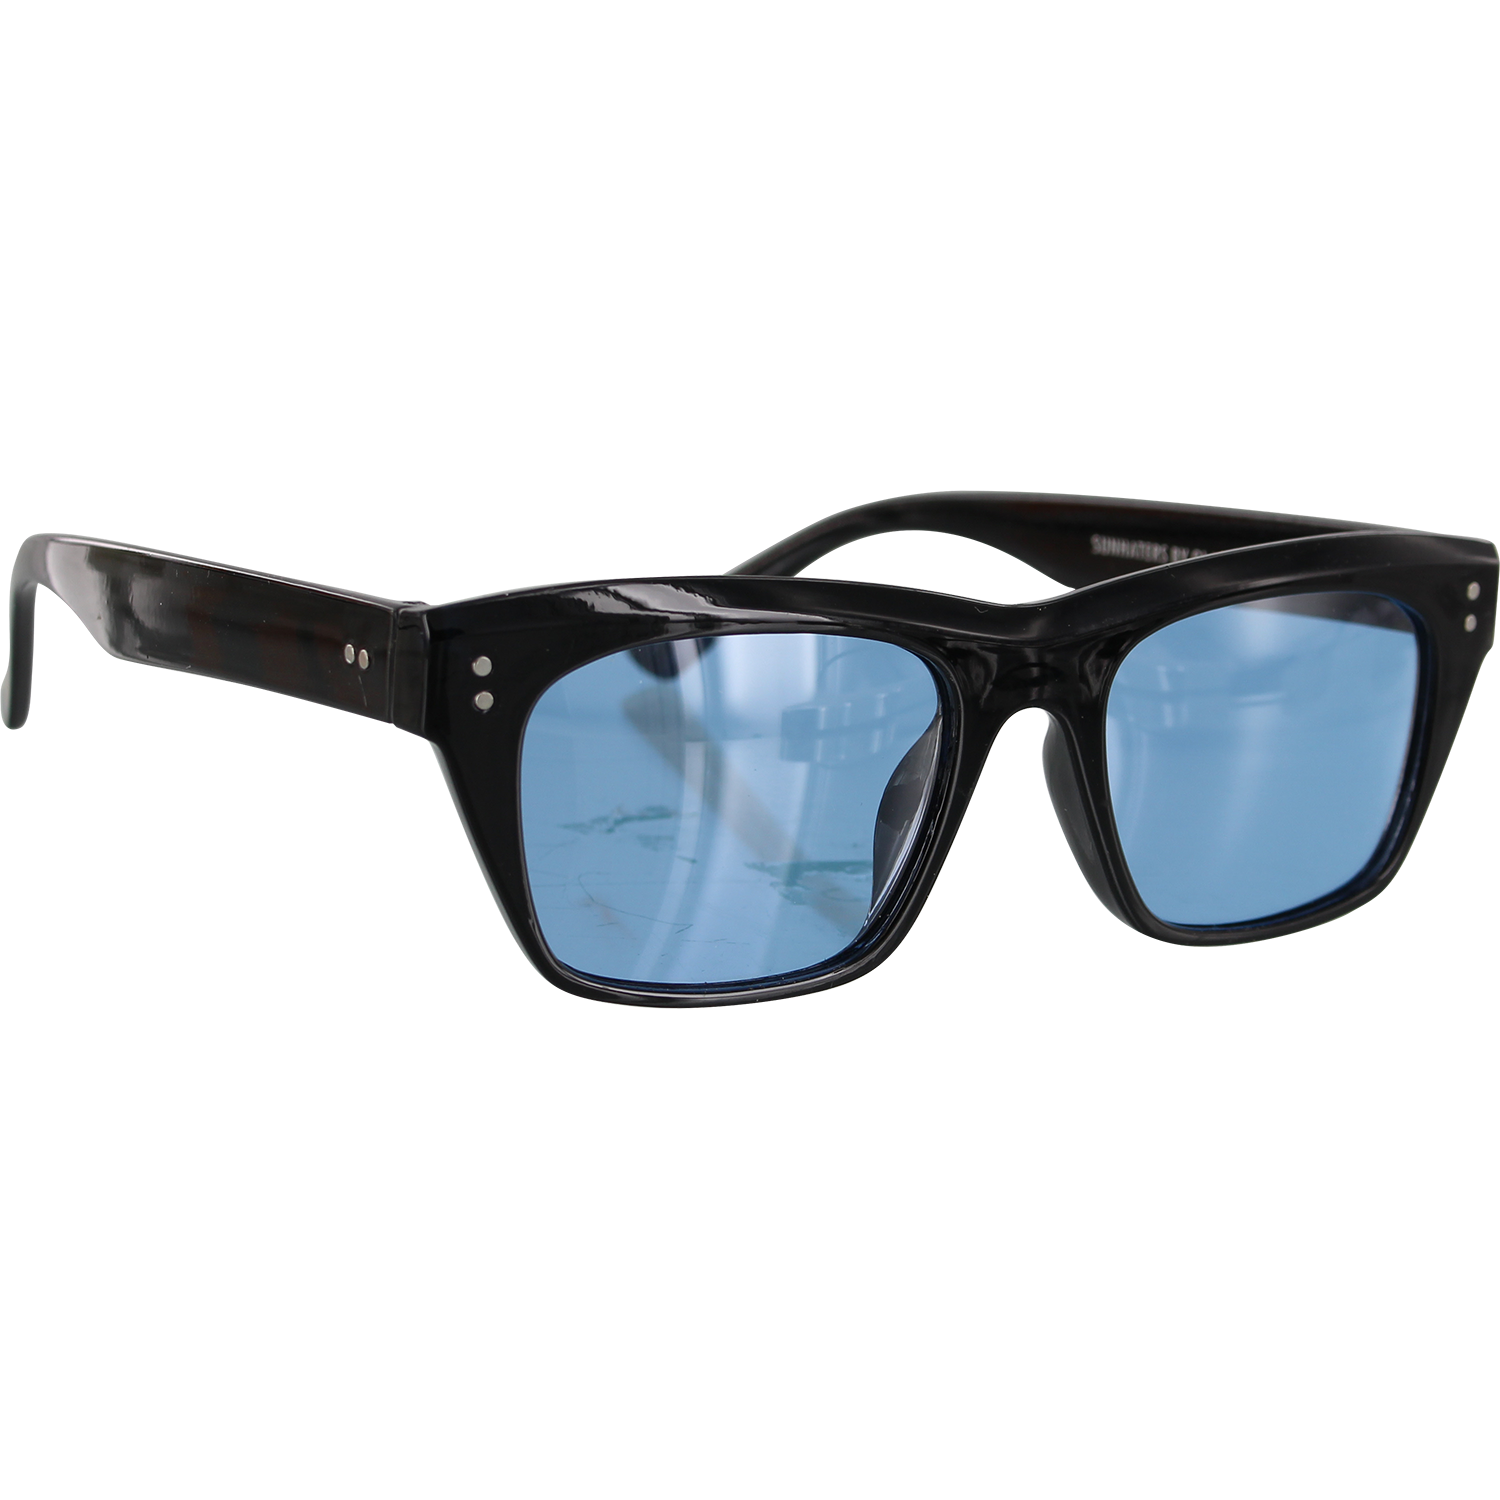 Glassy Santos Black/Blue Sunglasses Polarized